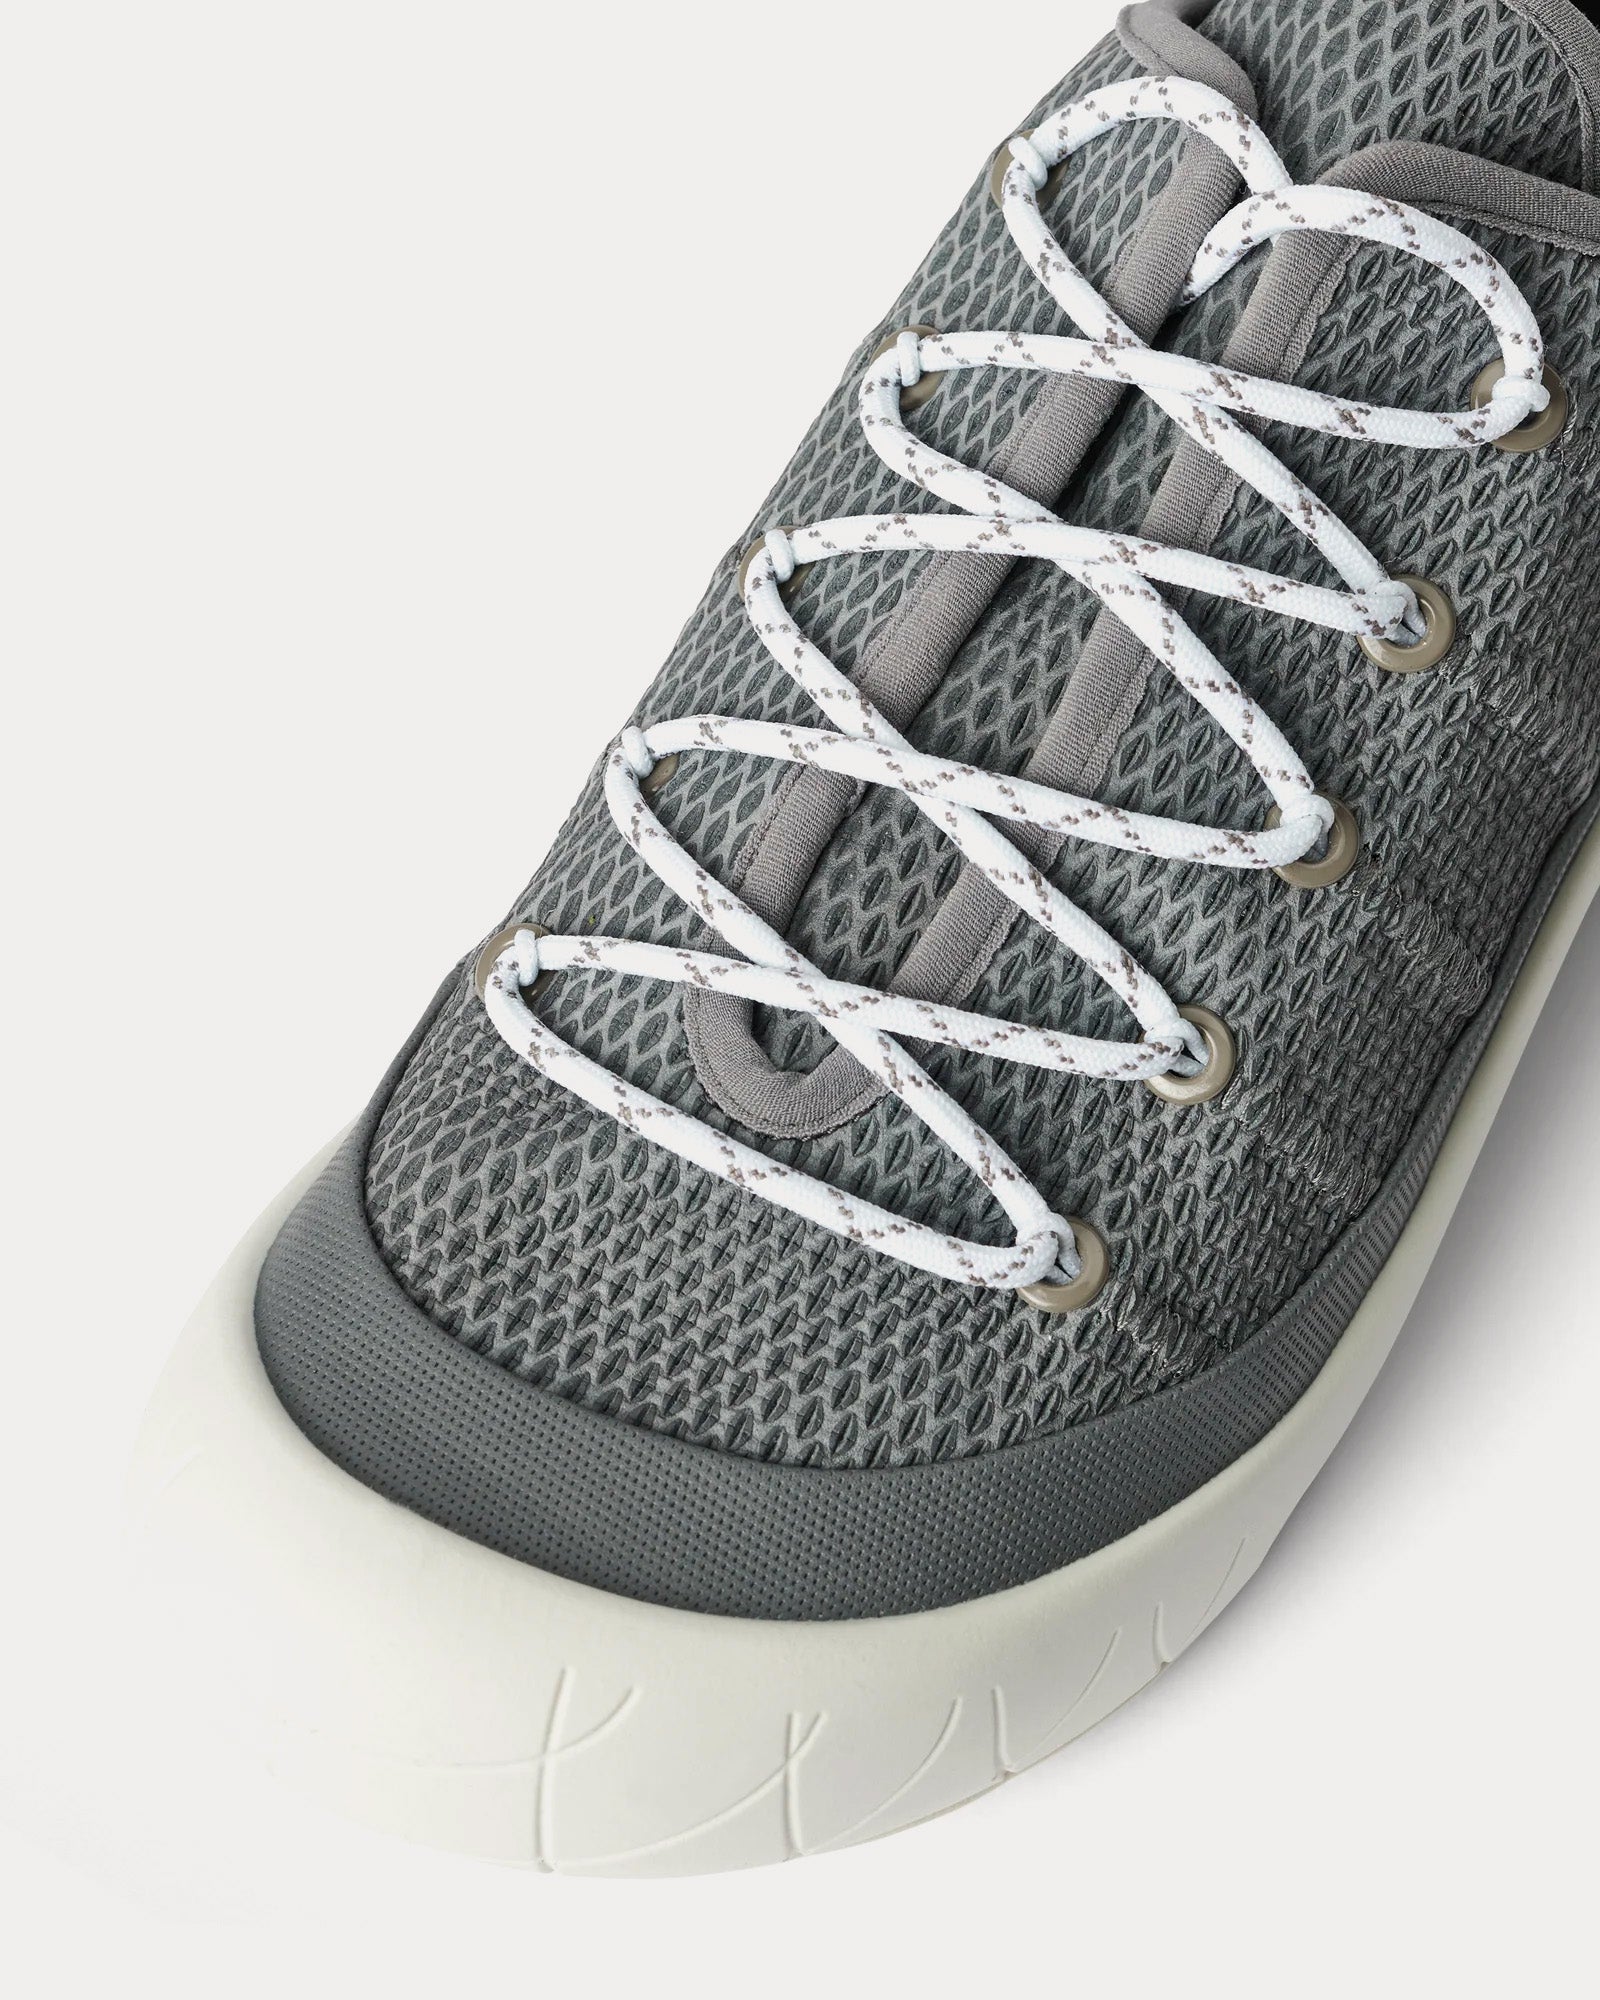 Nina Christen x At.Kollektive - Cluster X Sneaker Steel Grey / Bright White Low Top Sneakers